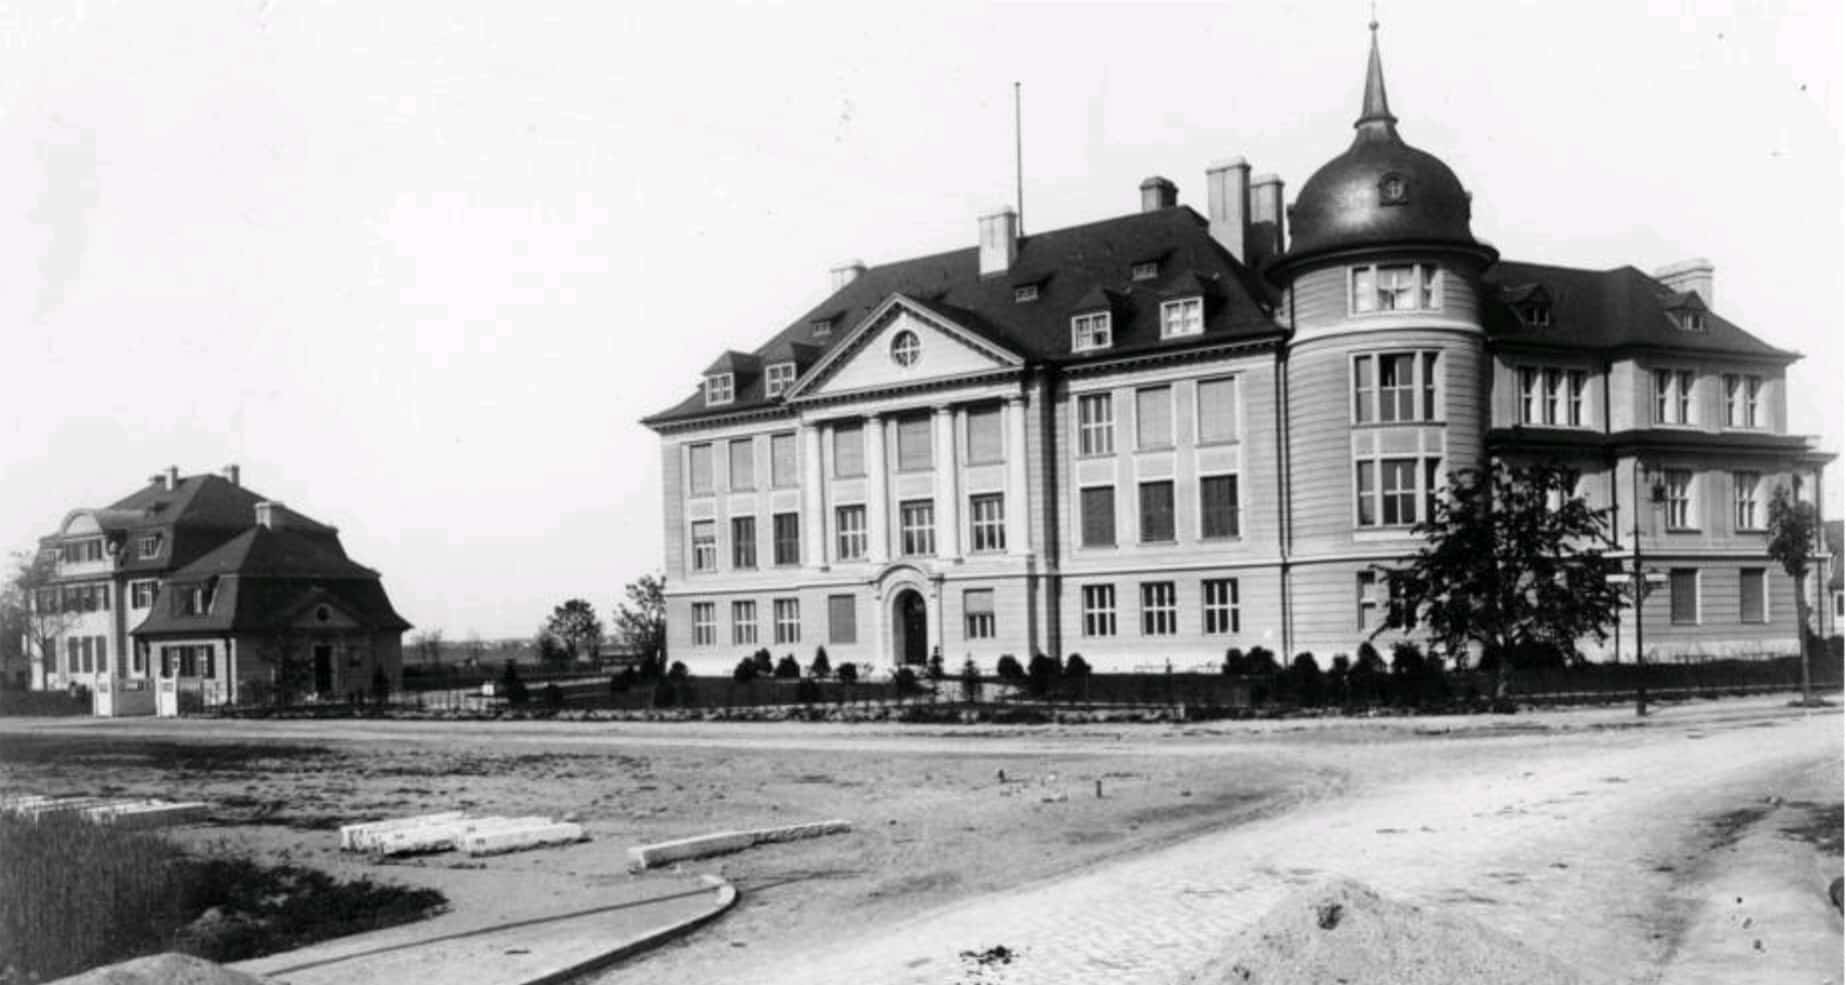 Kaiser Wilhelm Institute in Berlin Dahlem